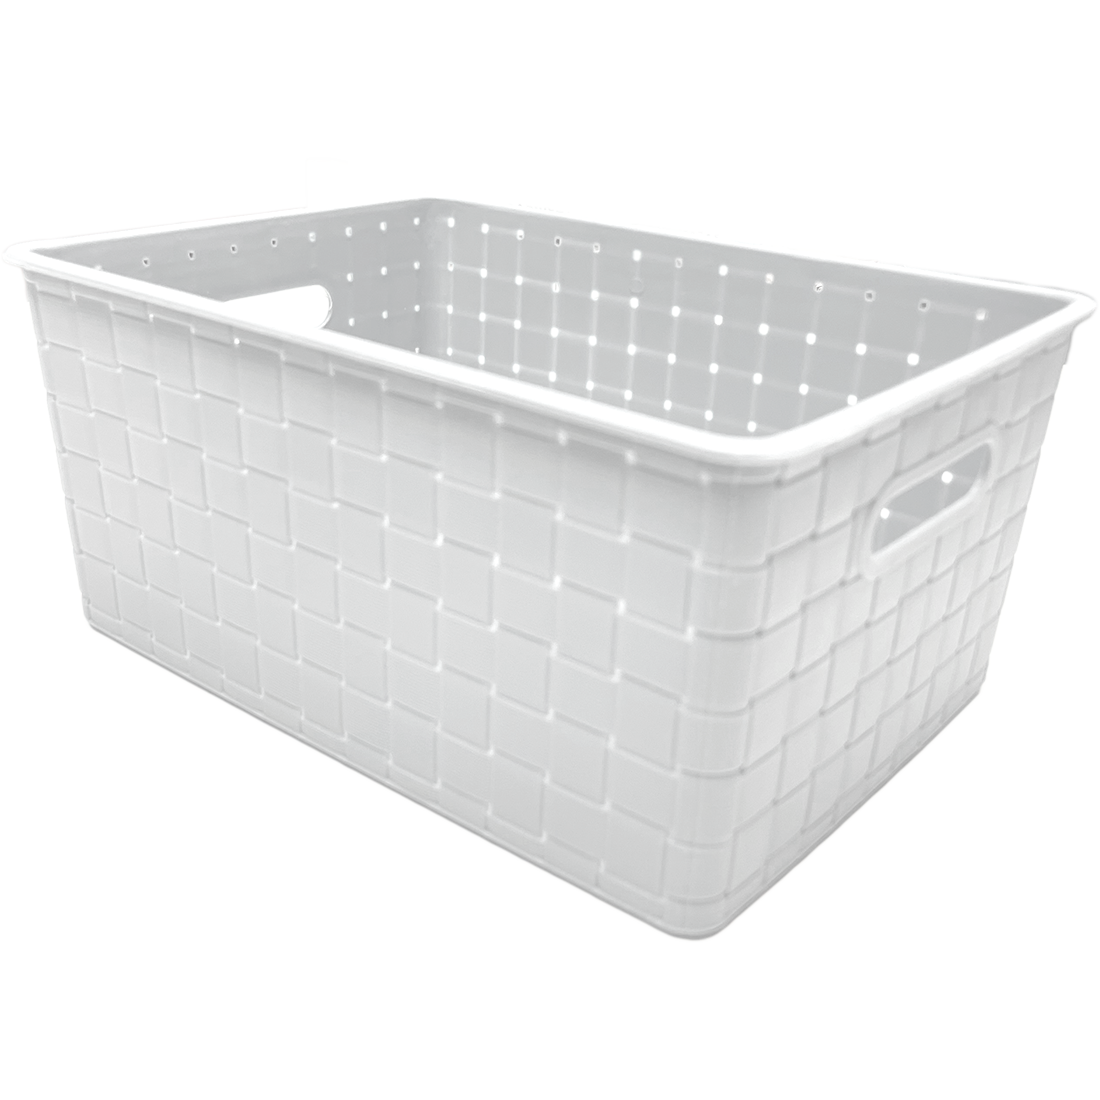 3 Pack Woven Plastic Storage Basket - White Checkered